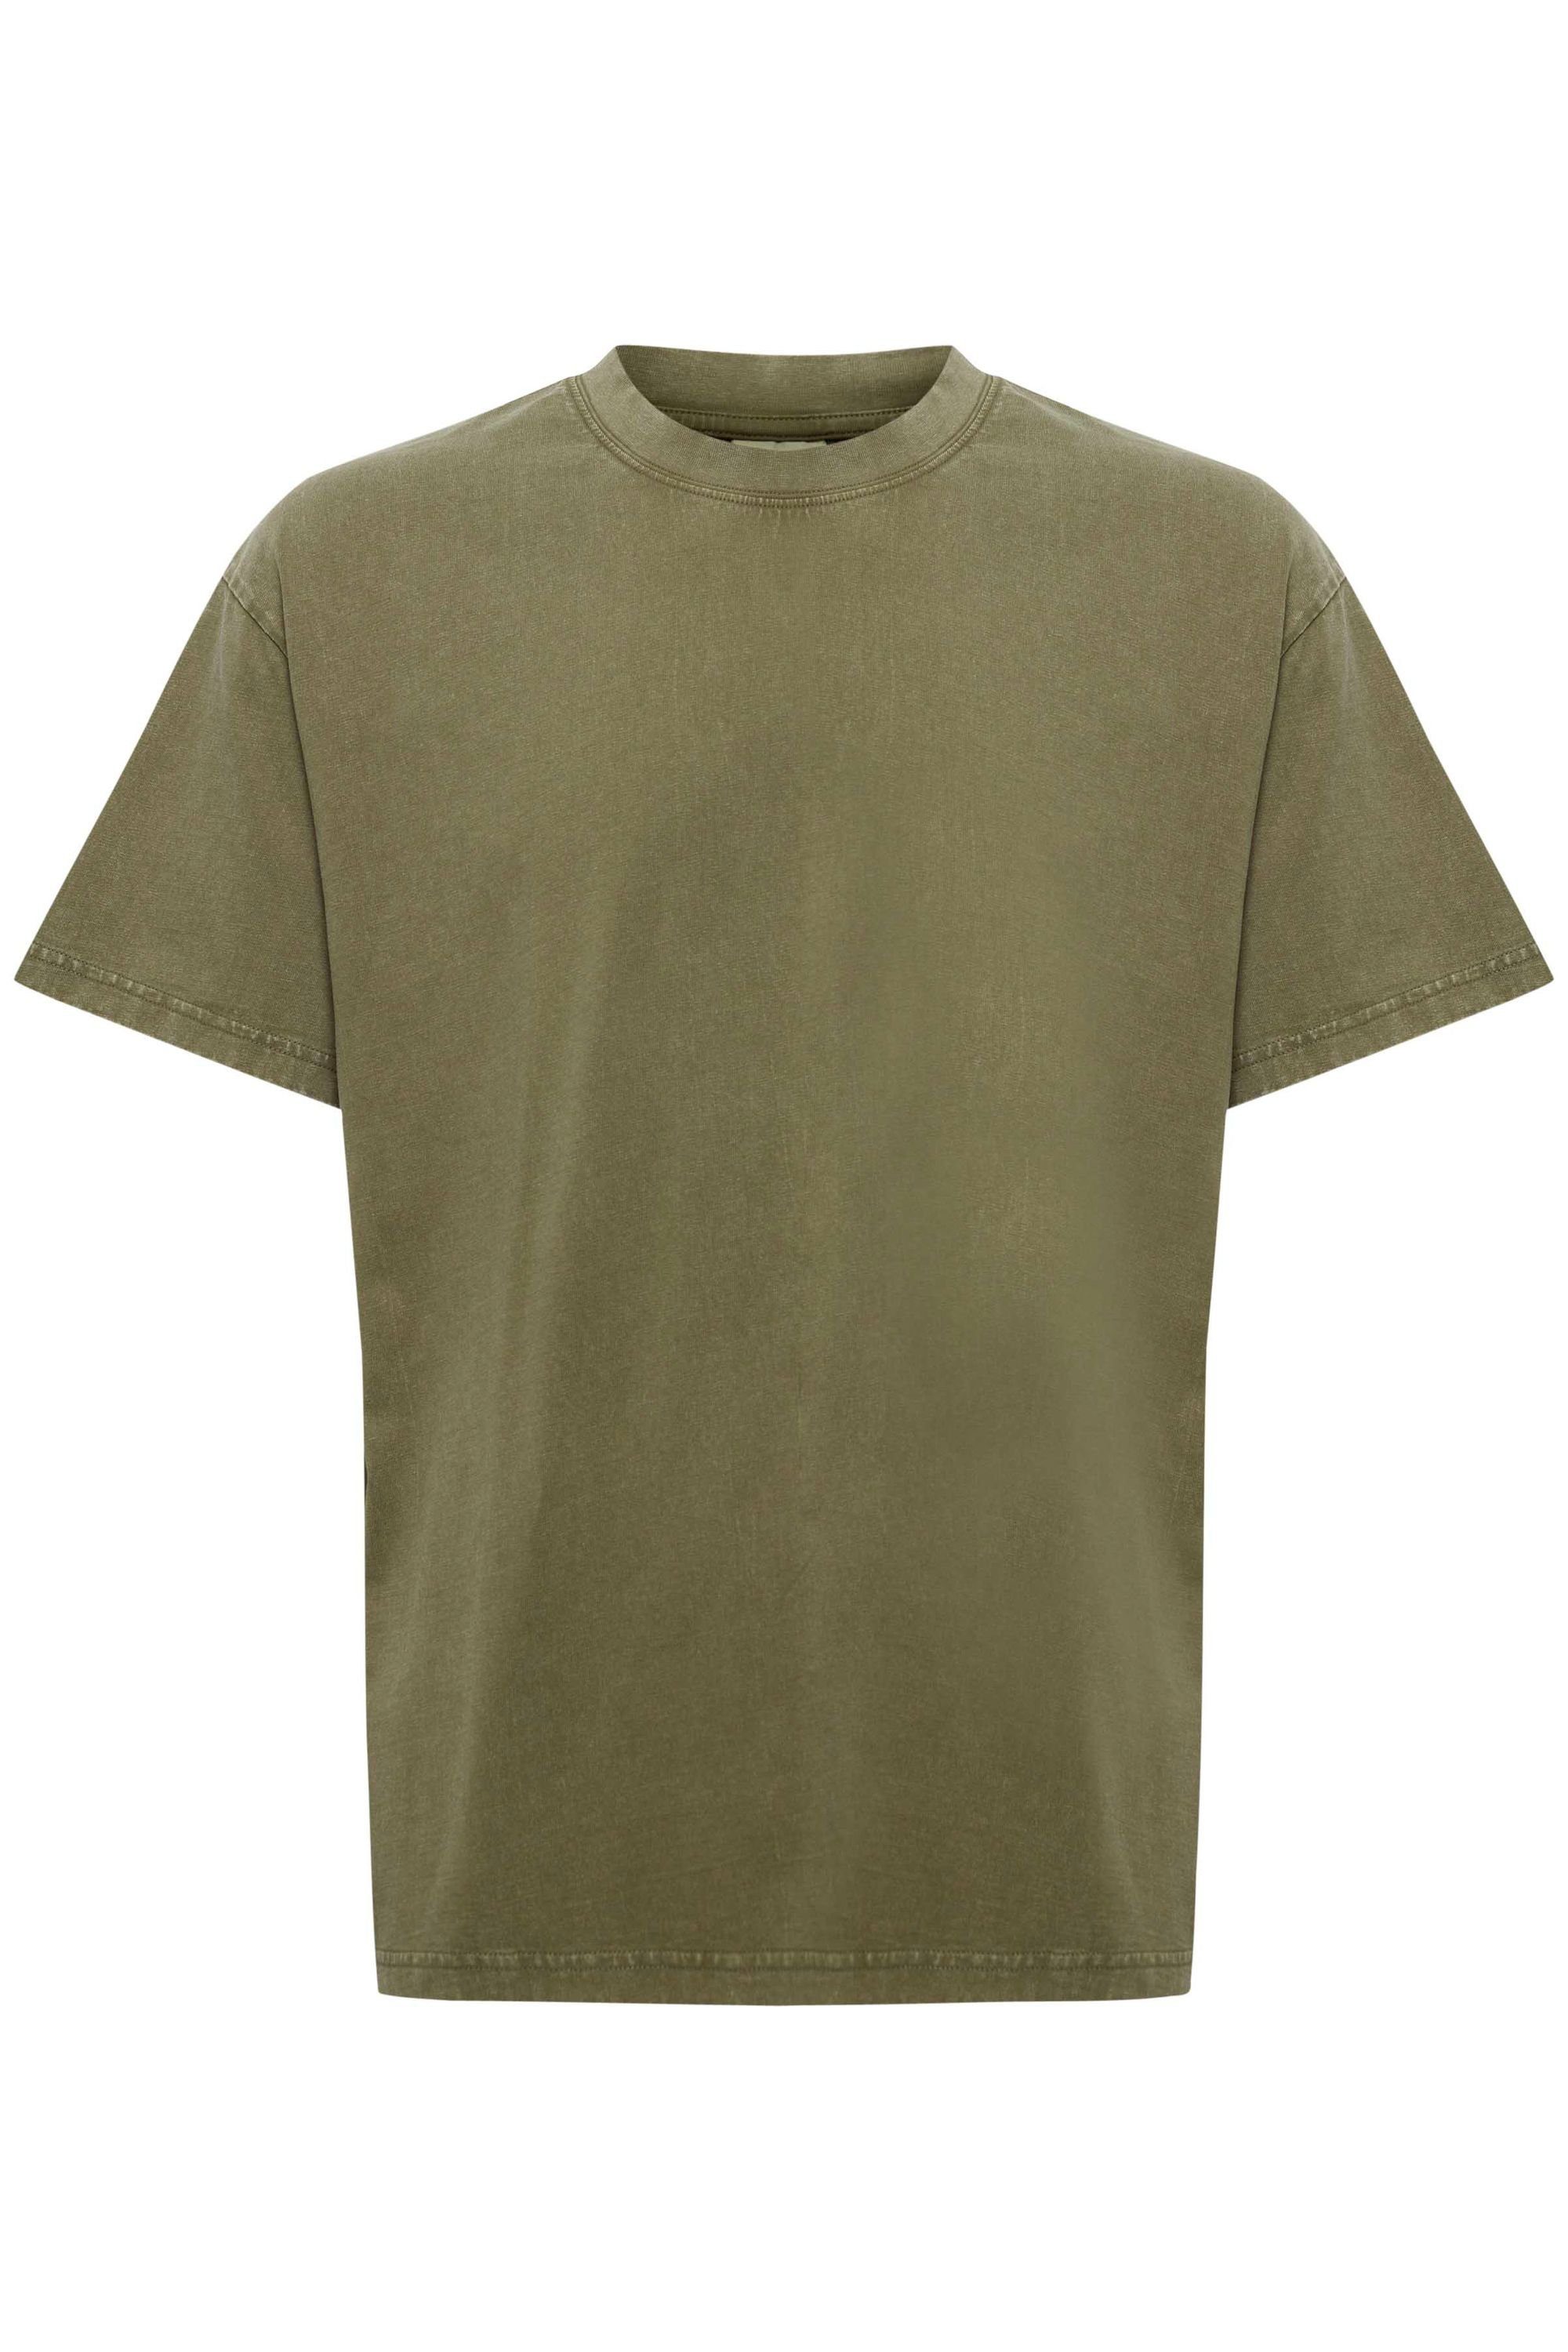 Dusty !Solid 21107878 SDGerlak - Olive (180515) T-Shirt